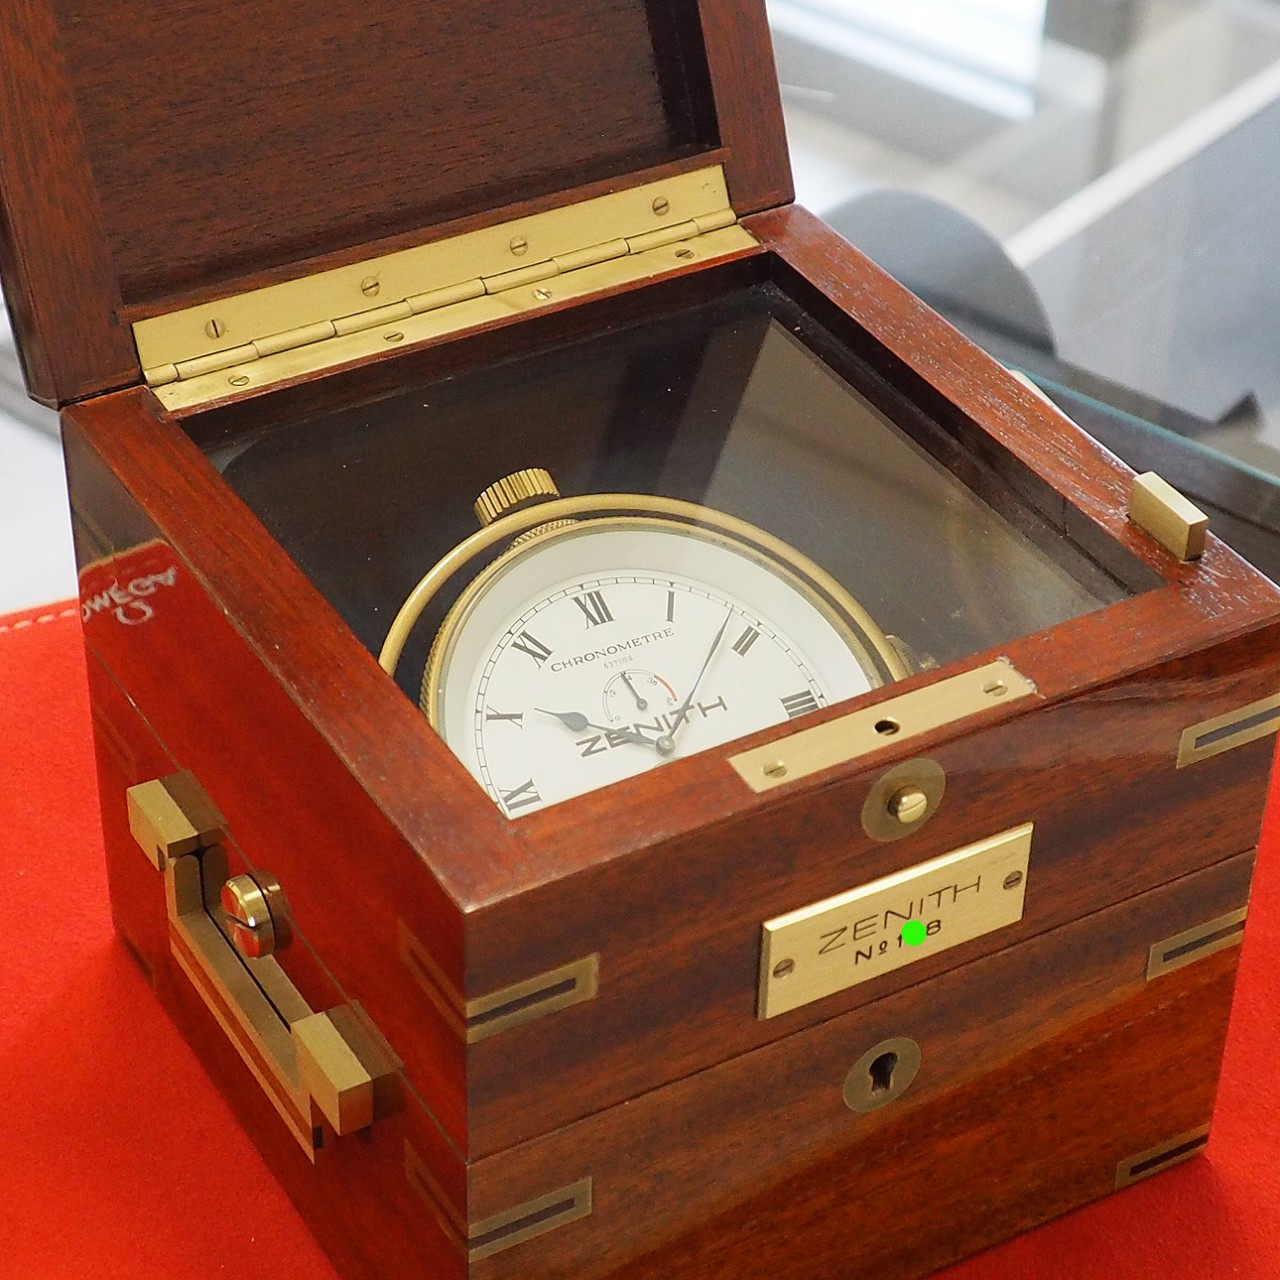 Zenith Chronometre/ Chronometer Schiffs-Chronometer, top condition